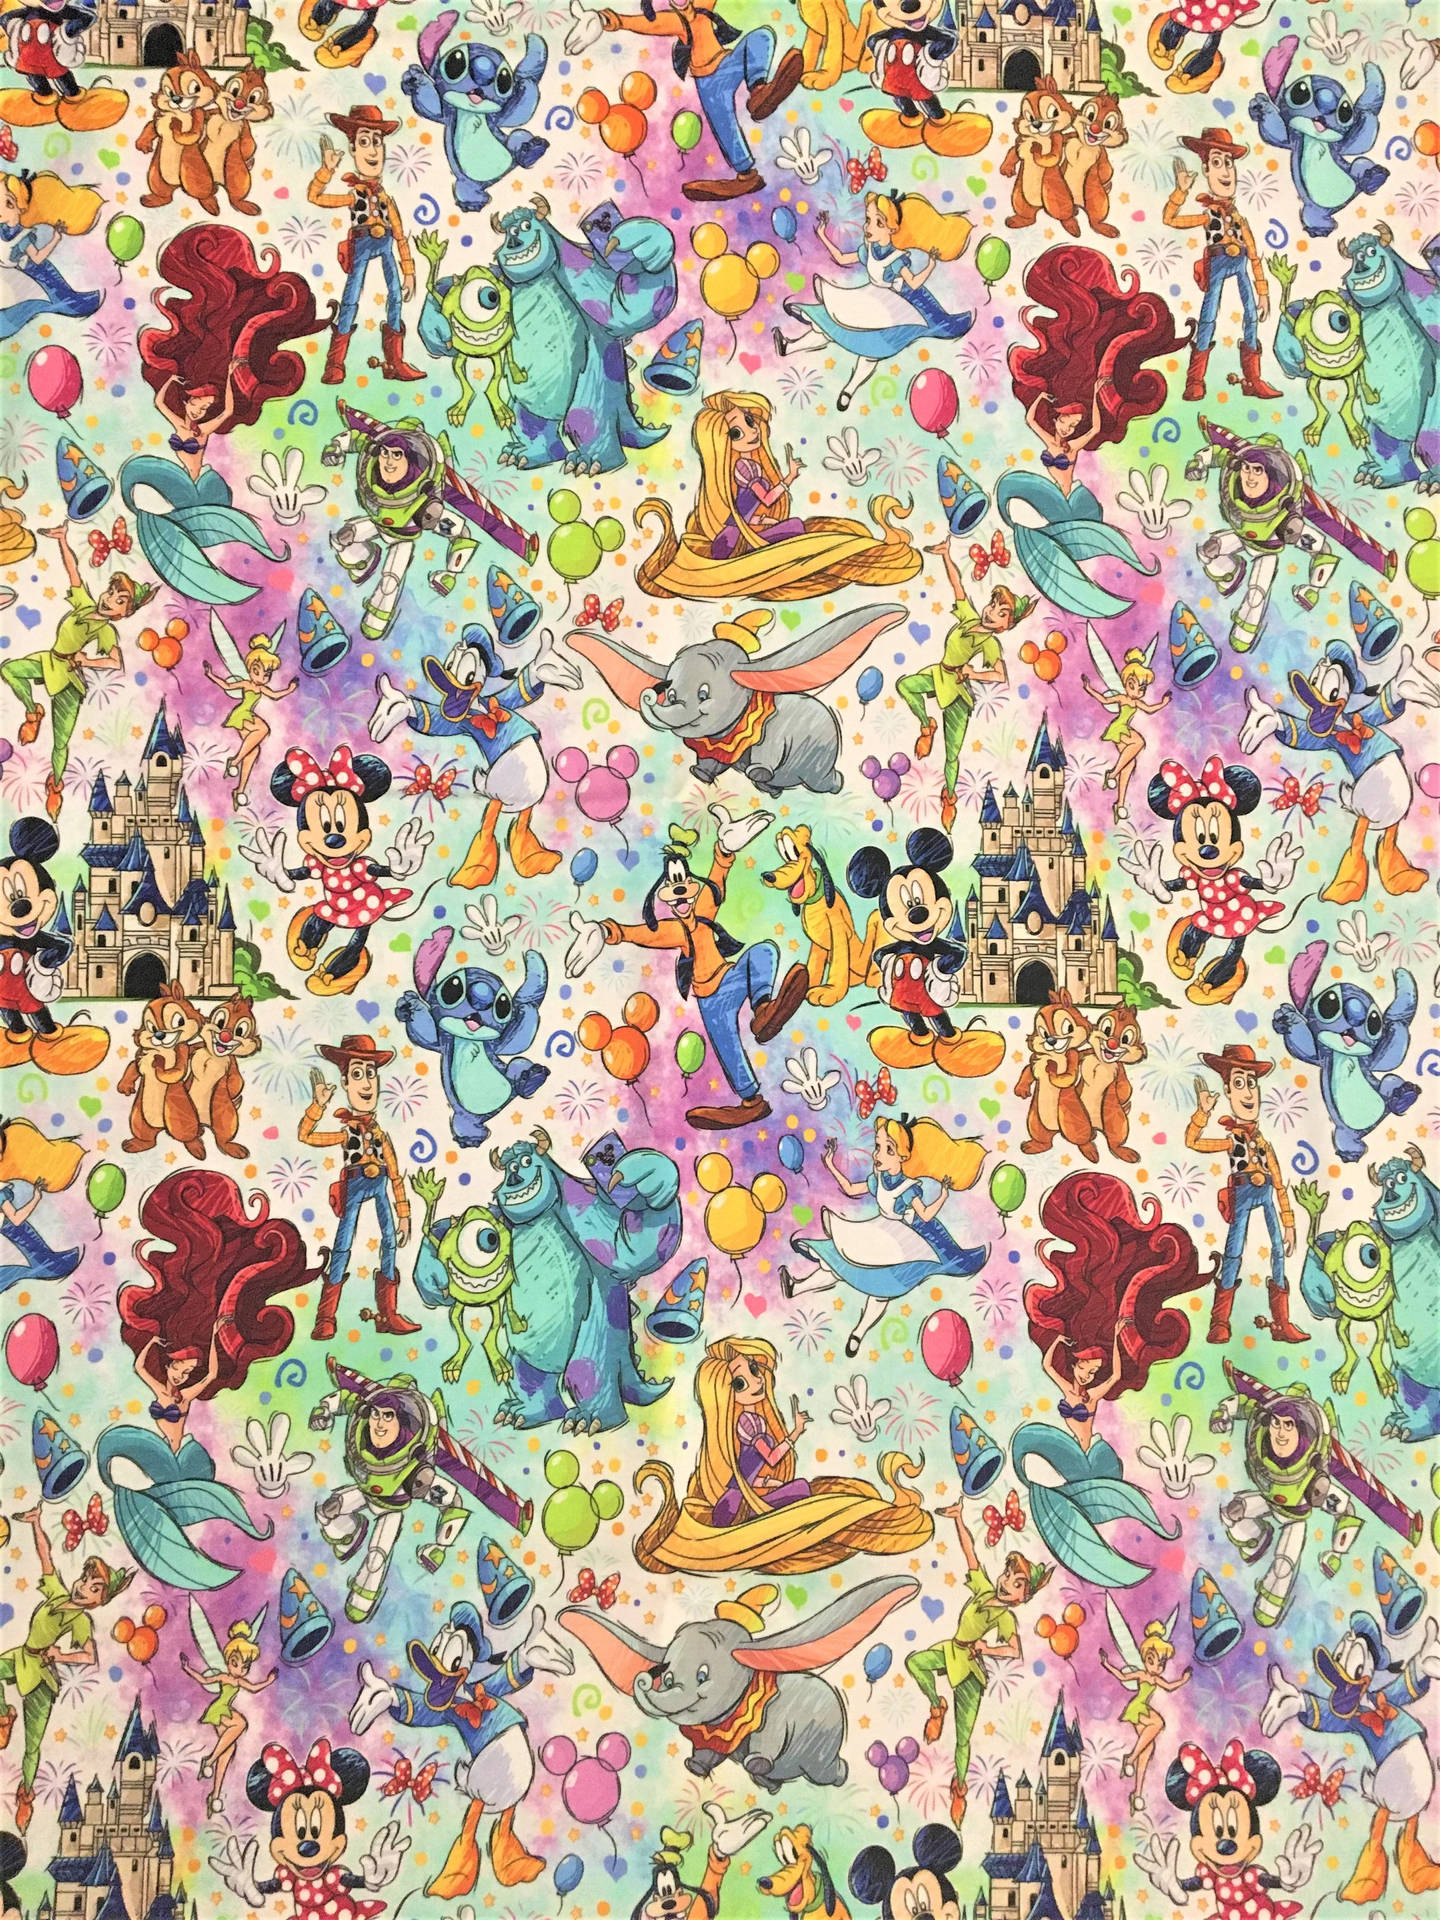 Free Disney Pattern Wallpaper Downloads, Disney Pattern Wallpaper for FREE